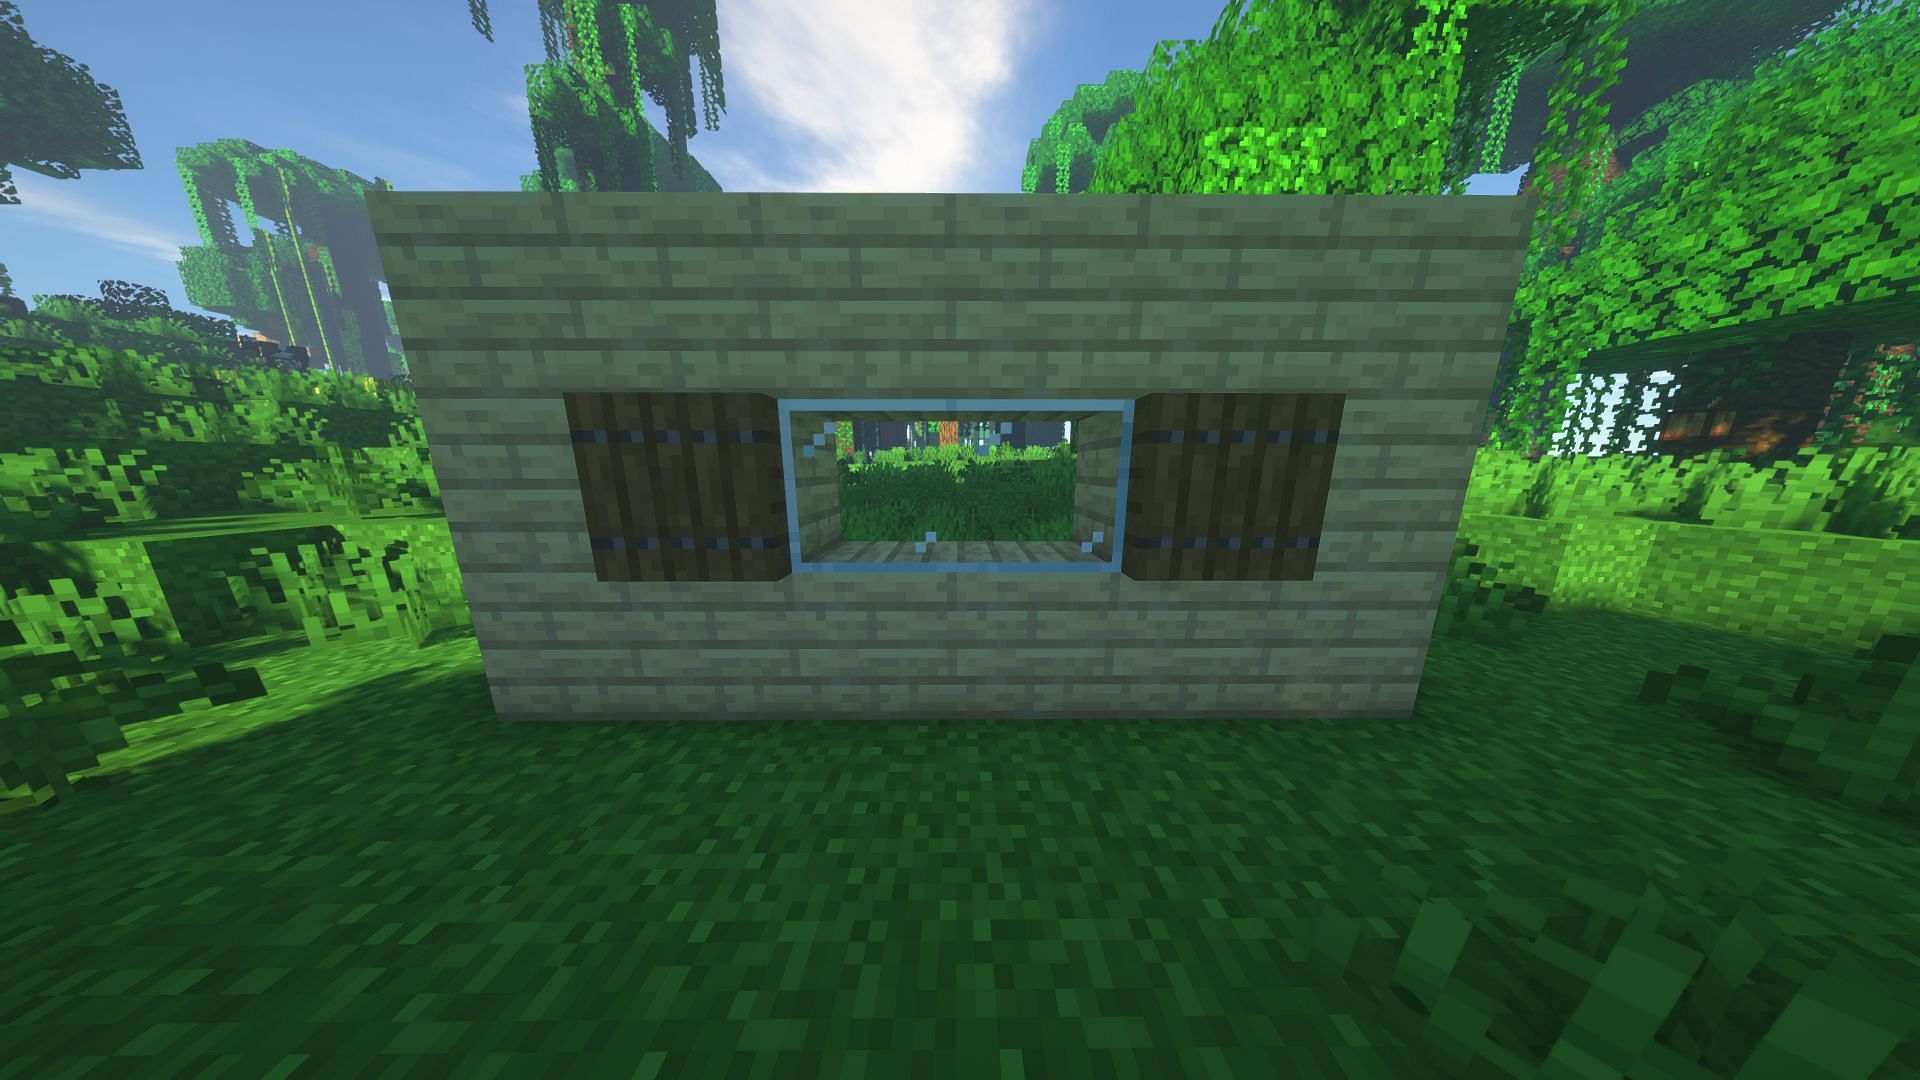 Spruce trapdoors as shutter (Image via Minecraft)